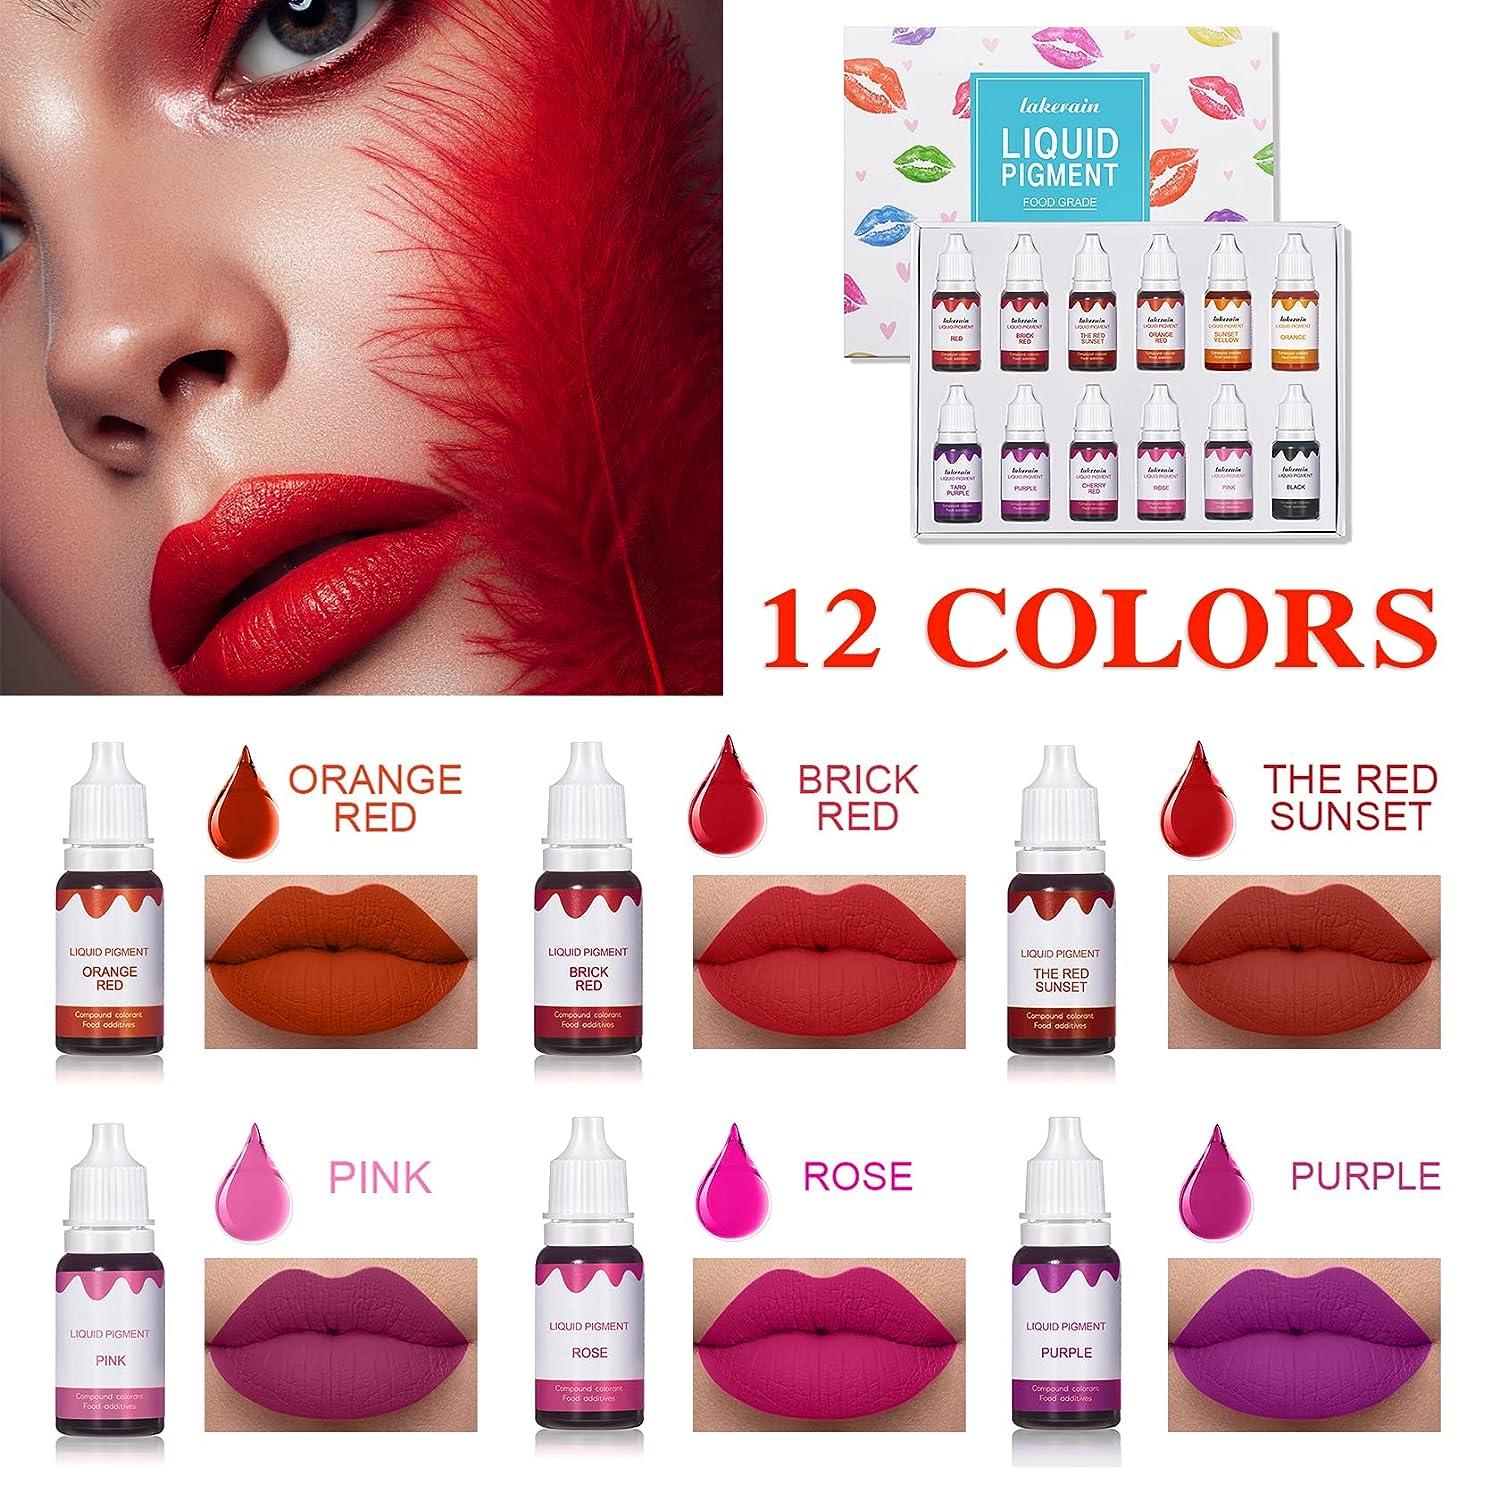 Liquid Pigment Lip Gloss base check customers pics out